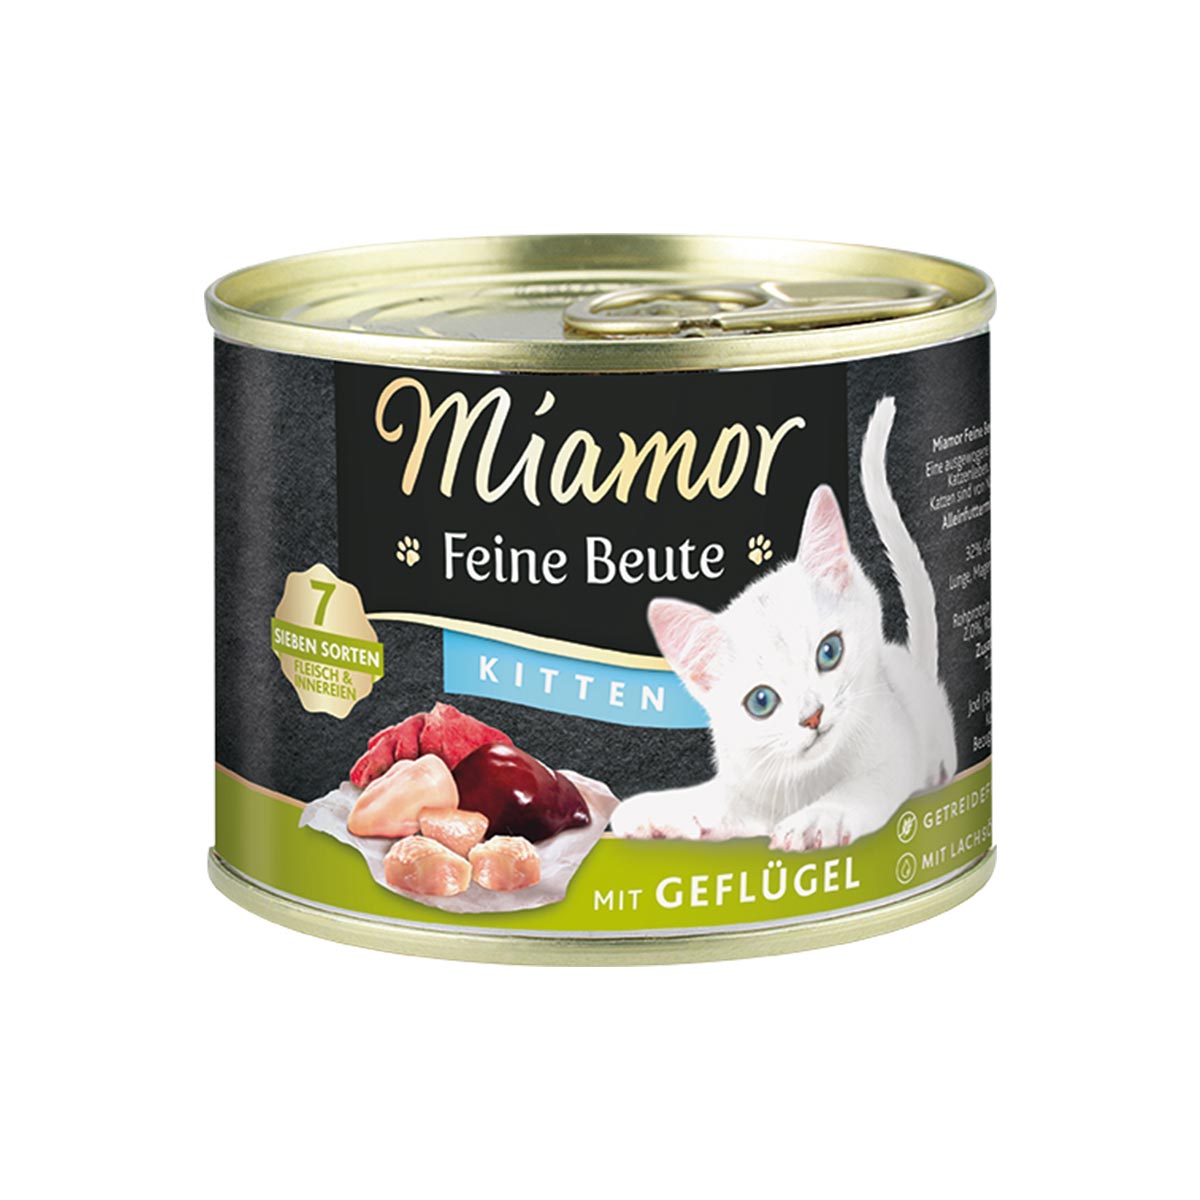 Miamor Feine Beute Kitten – Geflügel 24x185g